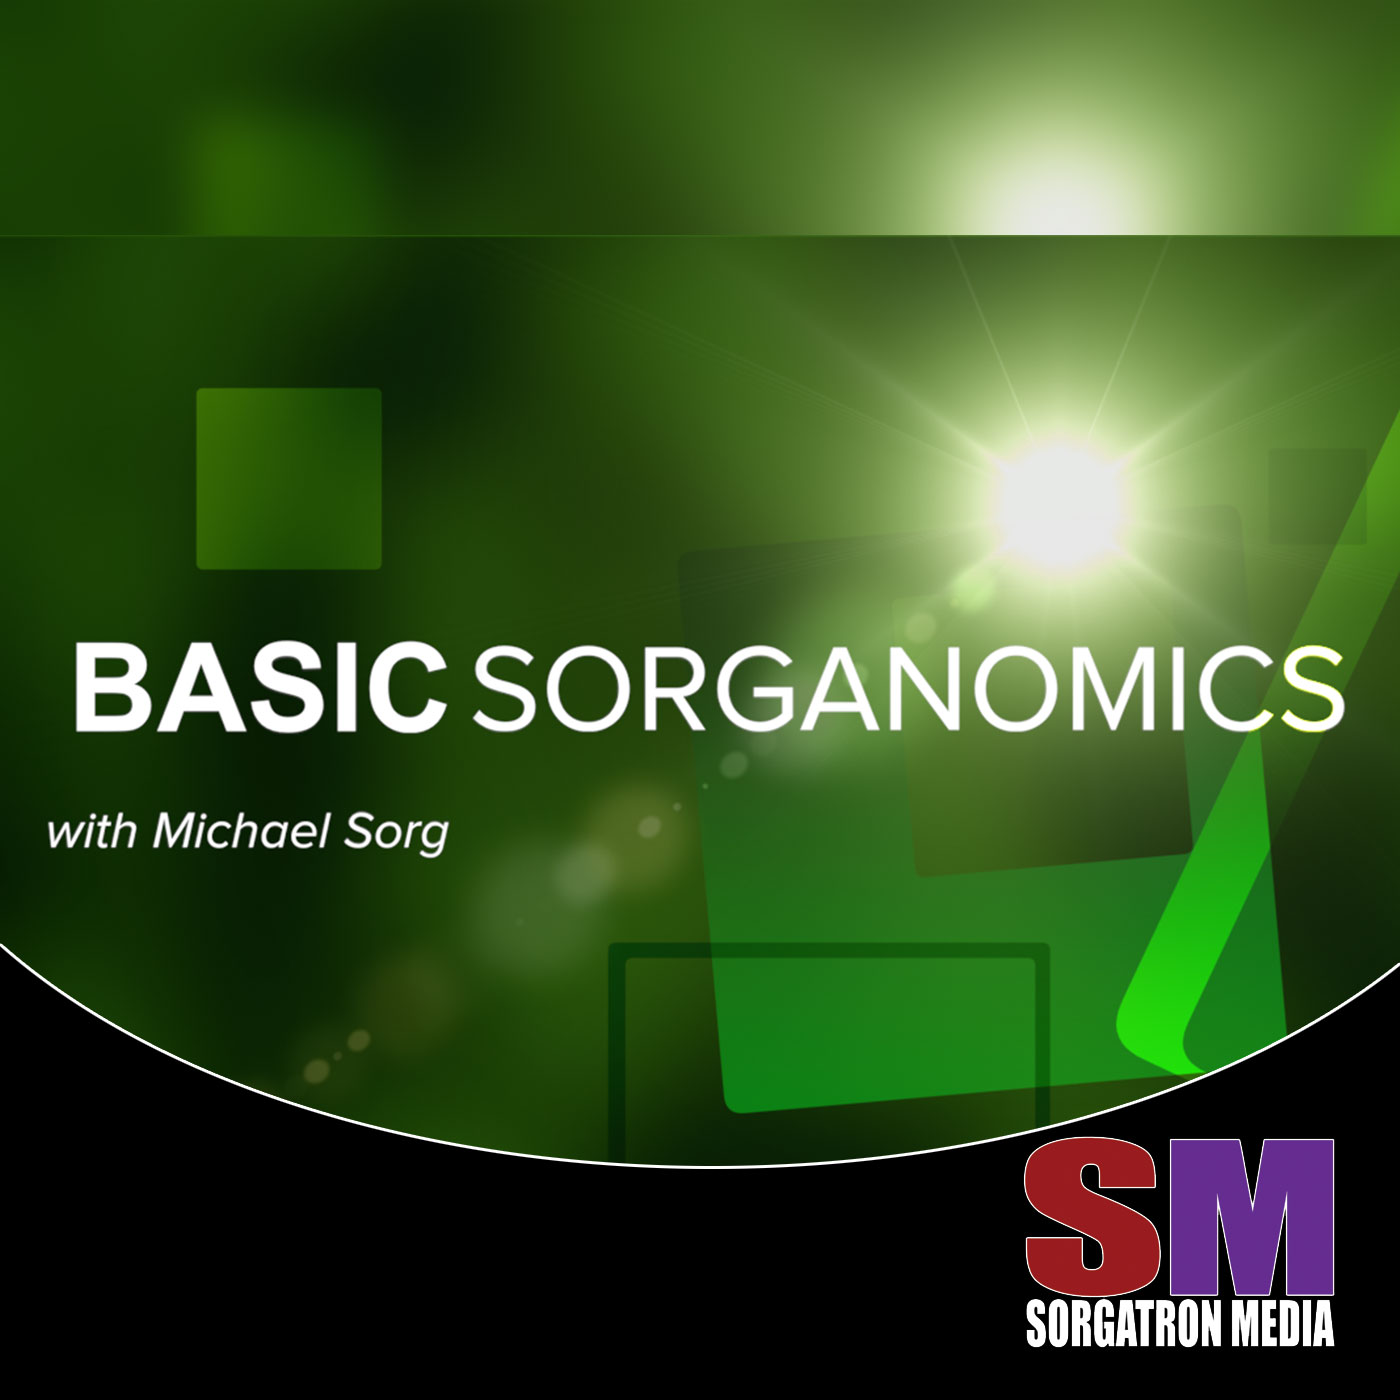 Basic Sorganomics: Your Creative Group